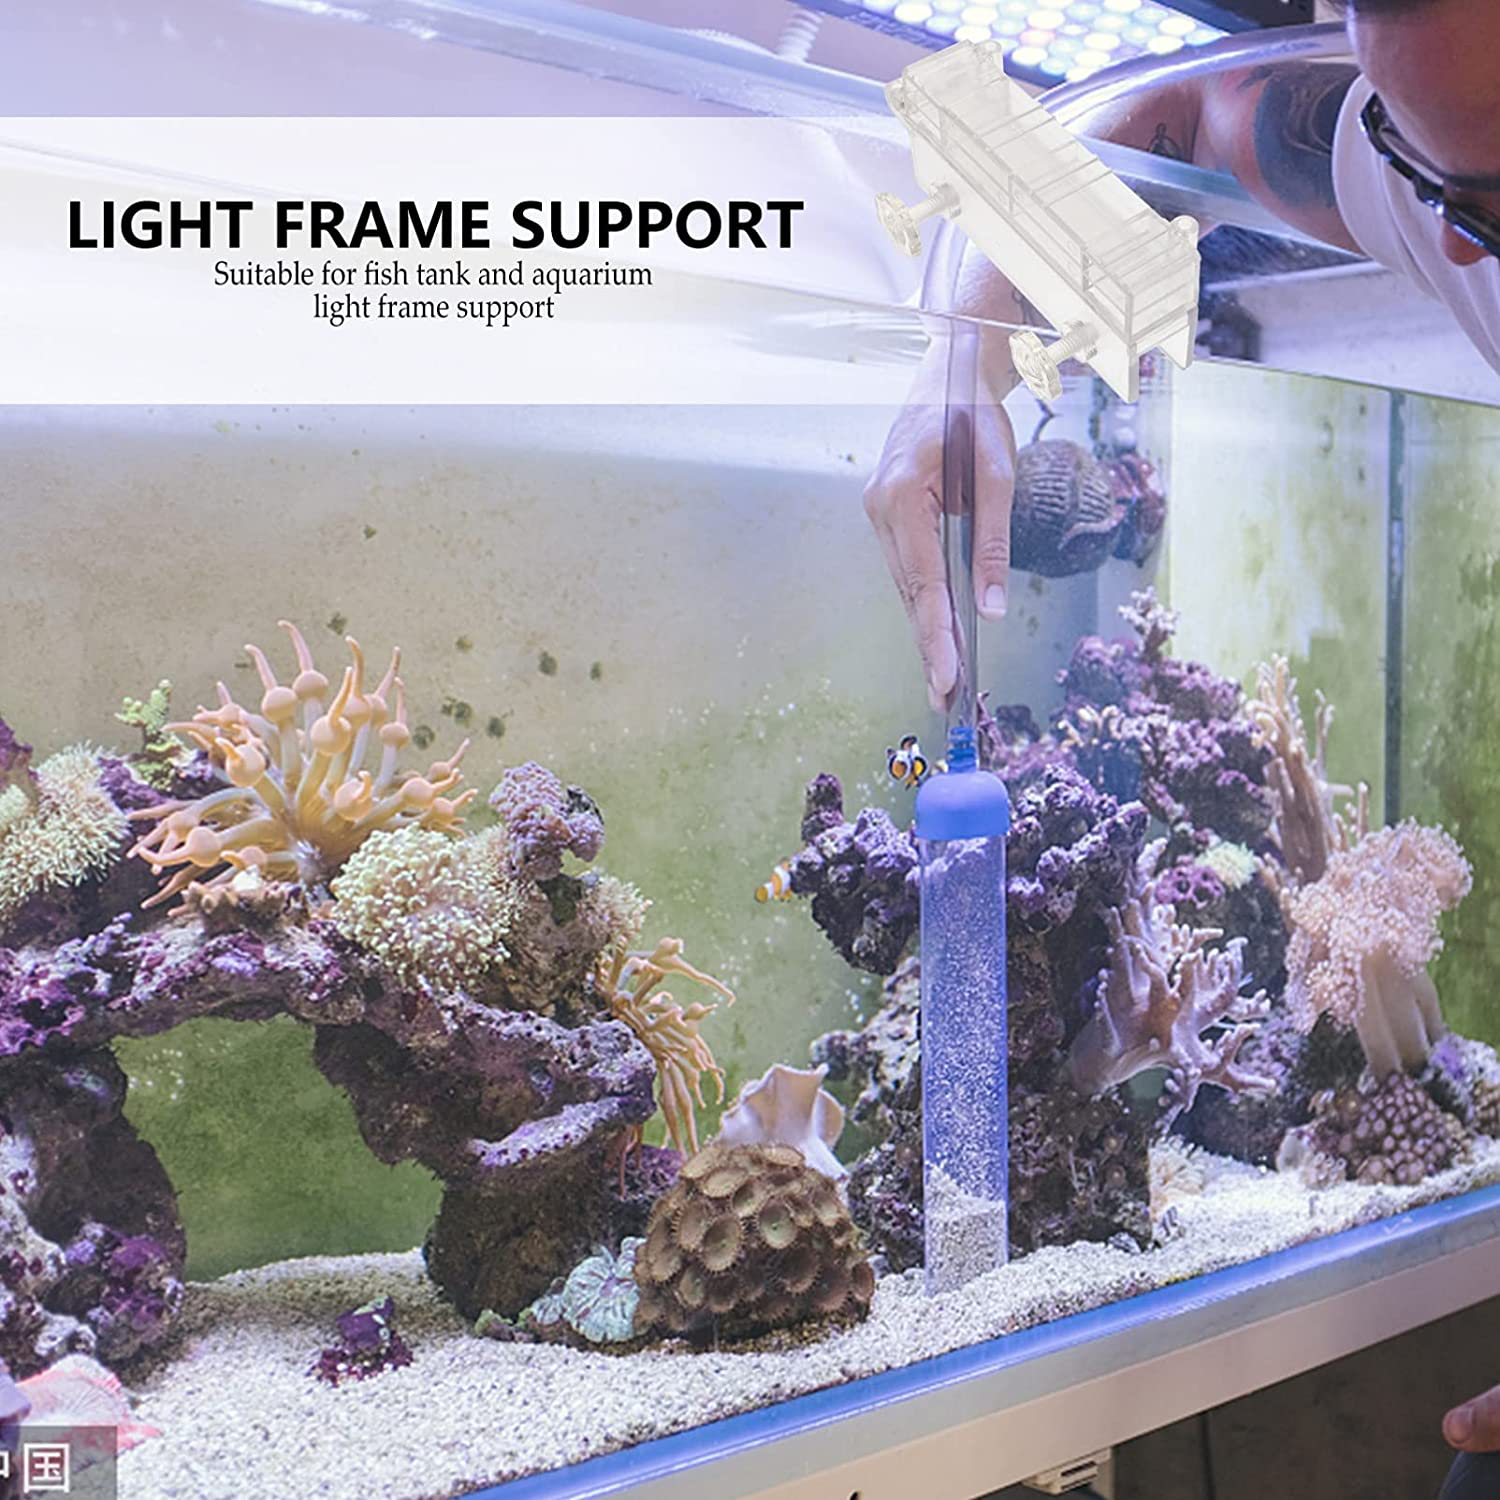 Balacoo 2 PCS Aquarium Light Stand Hanging Acrylic Fish Tank LED Light Holder Lamp Fixtures Support Stands Box Fish Tank Lighting Tools Bracket,Transparent,V1Z49L16Mt2X9096C40Xym,12X4.8X2.6Cm